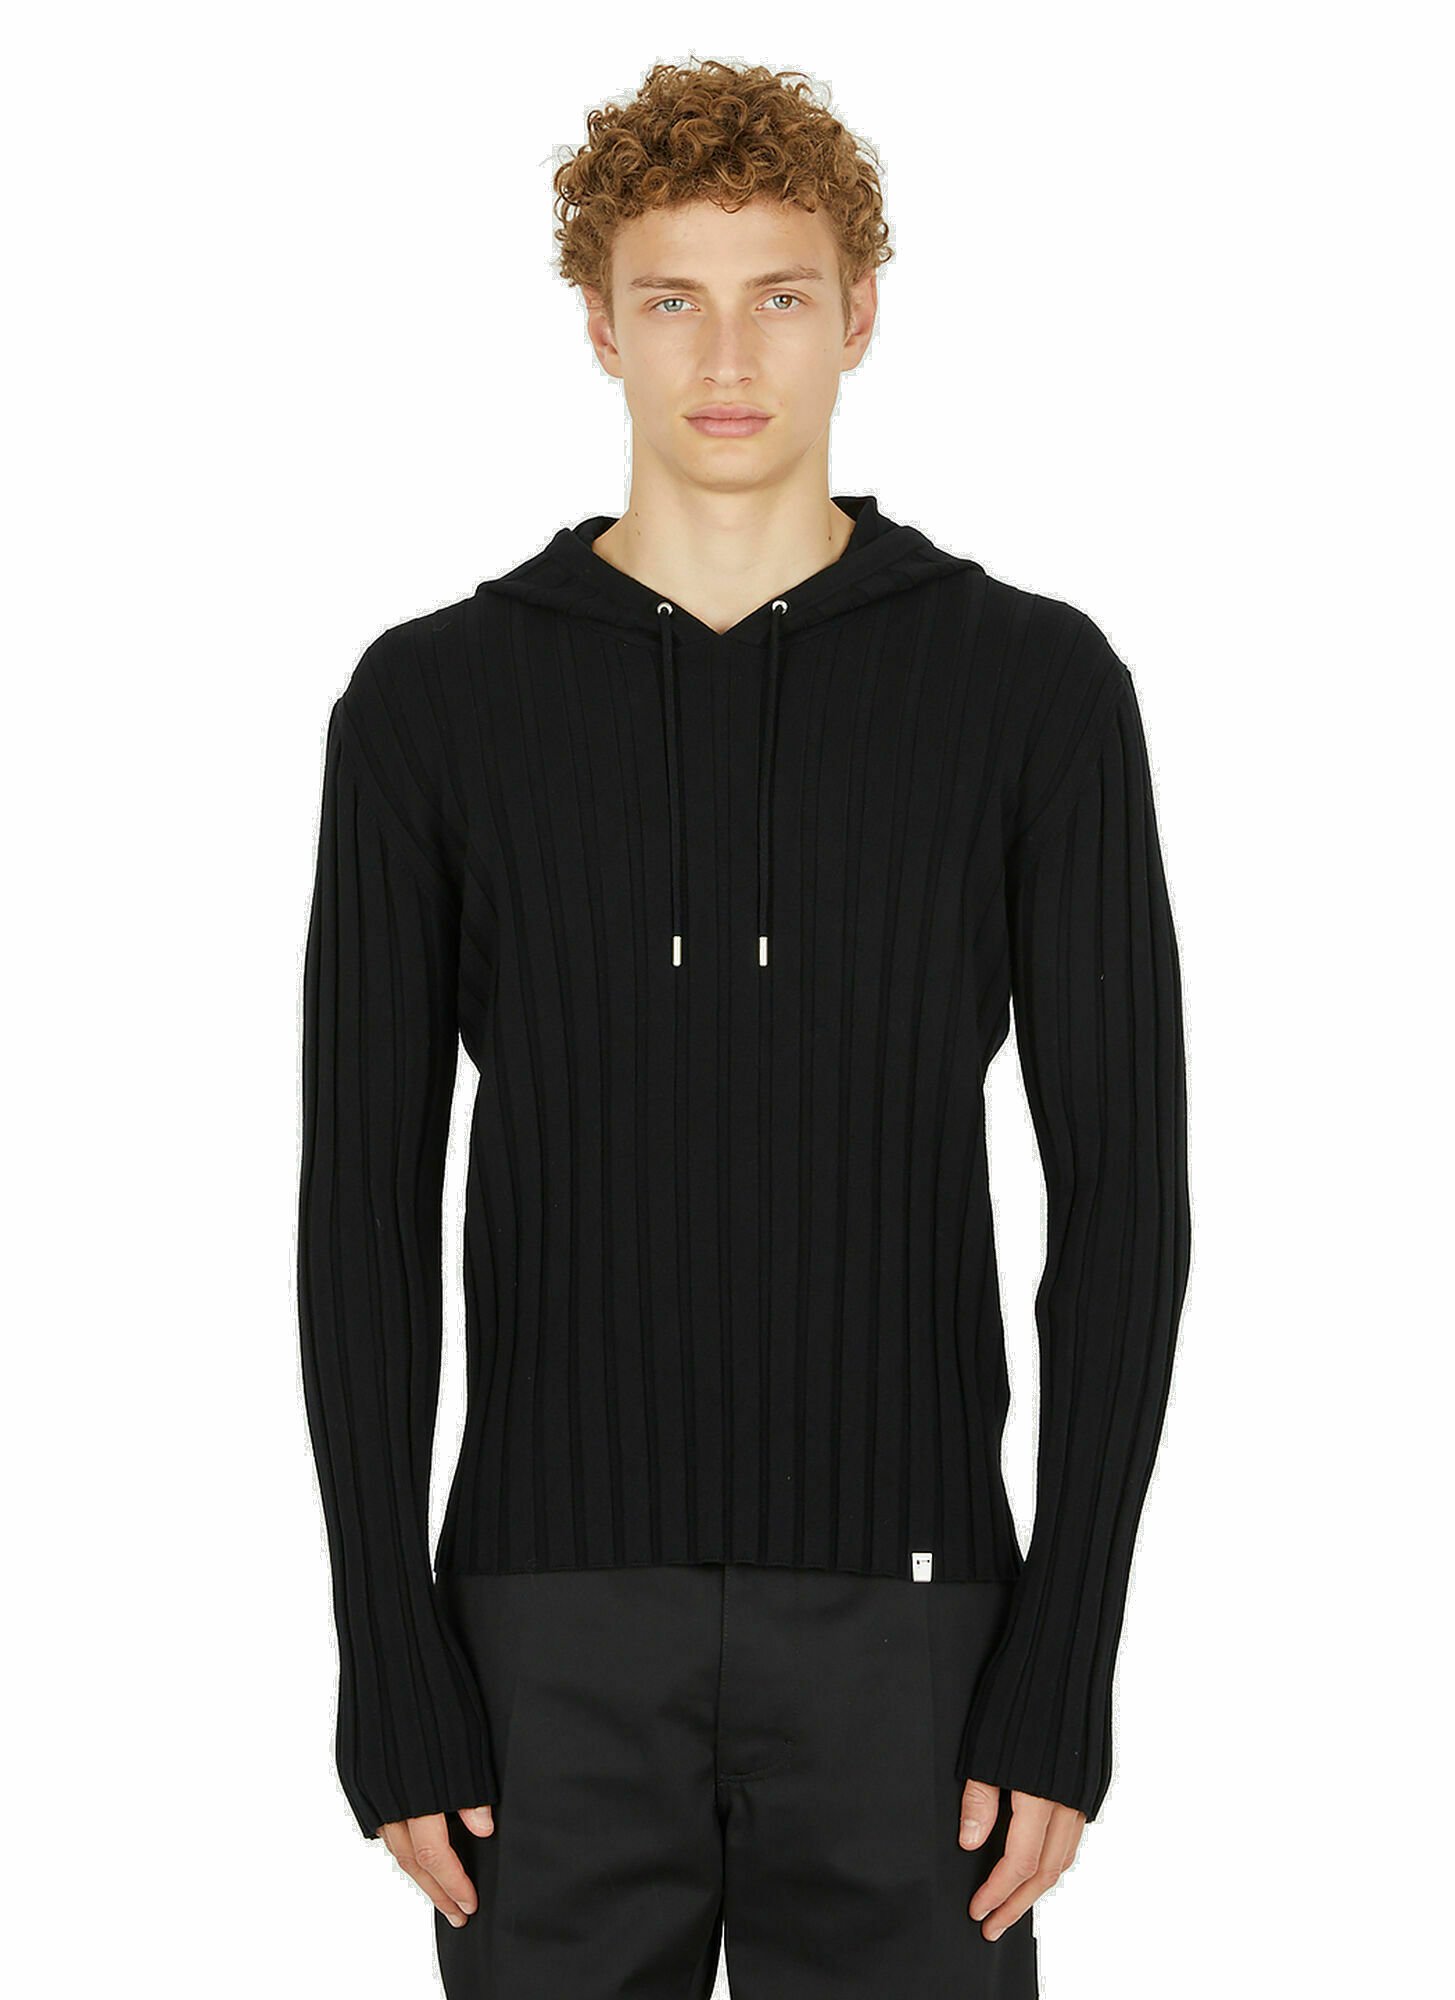 Photo: Ribbed Knit Hooded Sweatshirt in Black